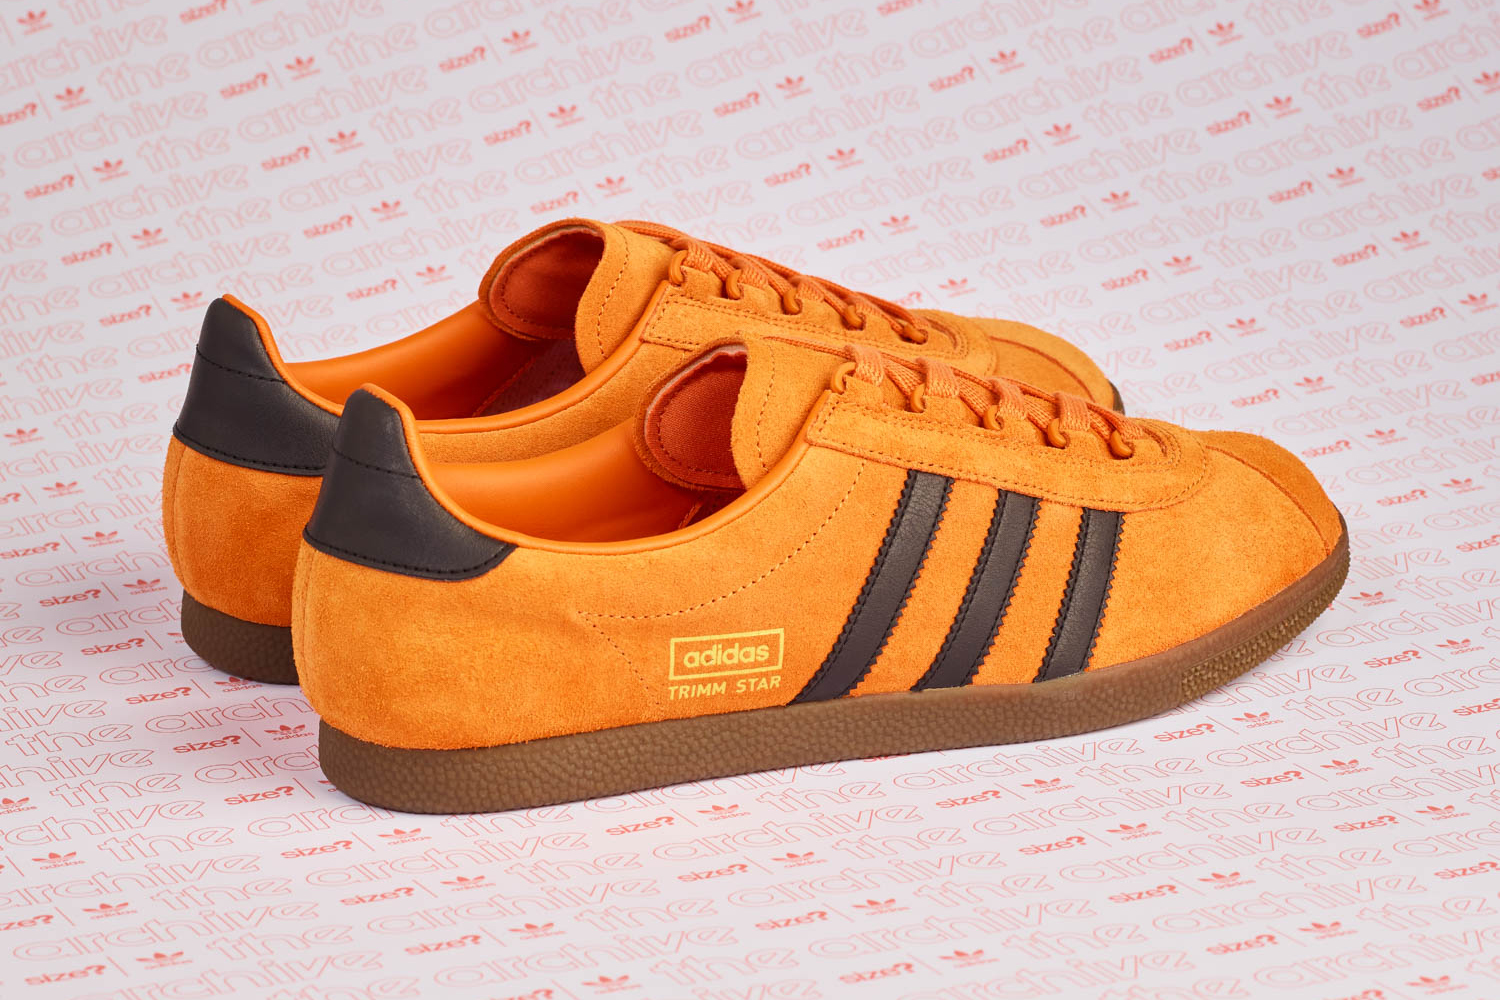 adidas Originals Archive Trimm Star Pumpkin Sneaker Details Size? Official Collaboration Release Cop Purchase Buy Kicks Shoes Trainers Orange Vintage